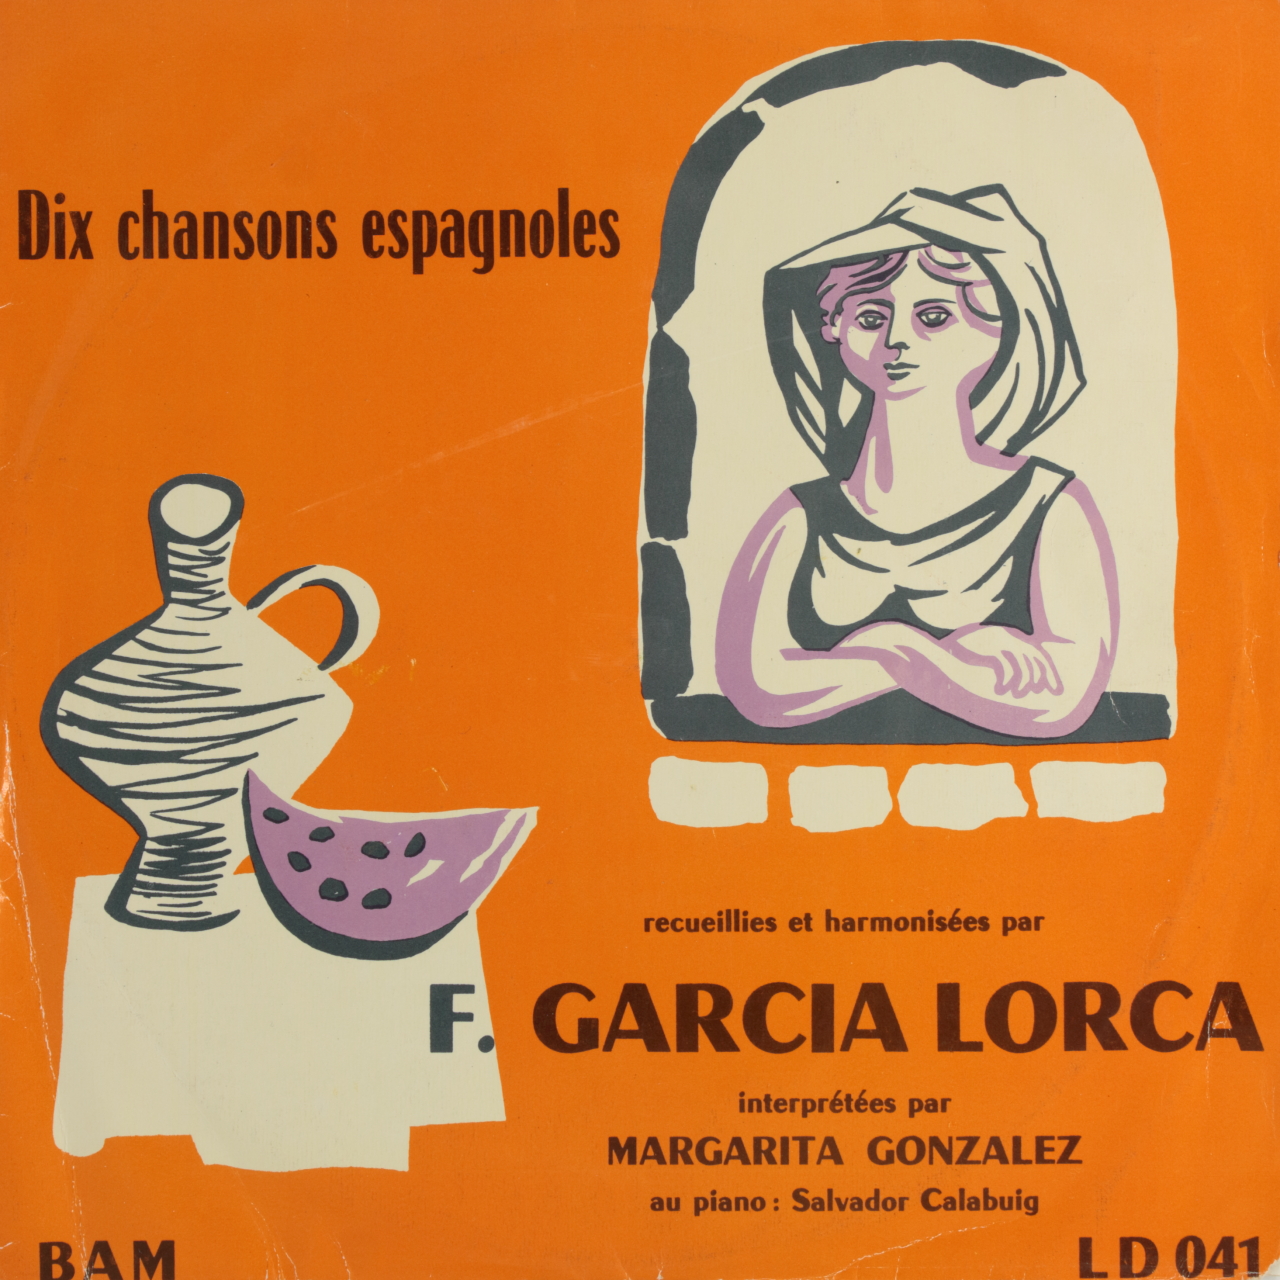 García Lorca: Dix chansons espagnoles